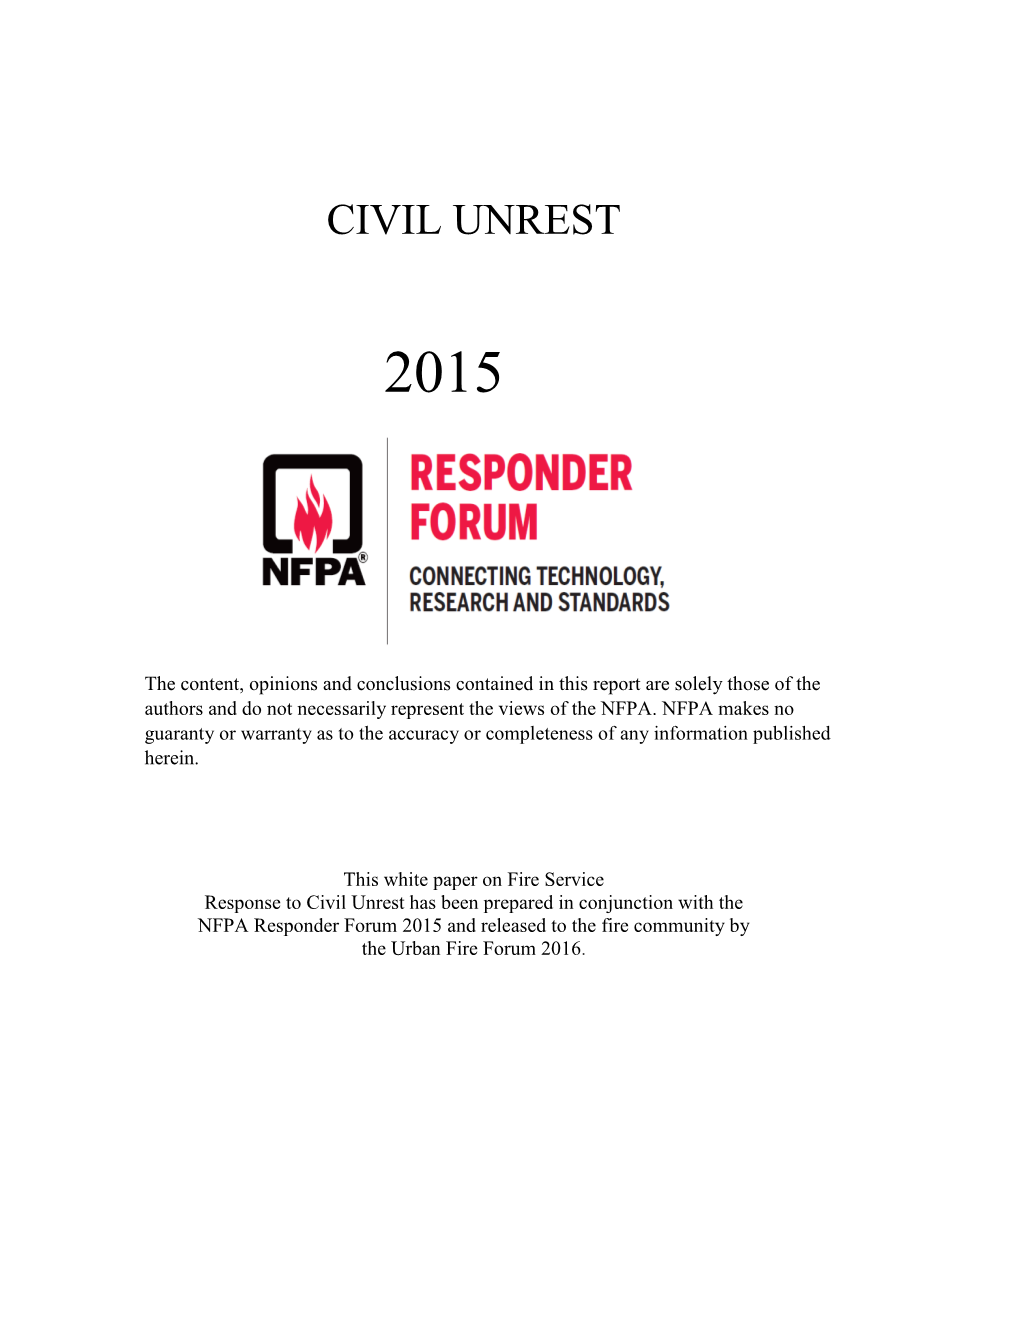 NFPA Responder Forum Civil Unrest